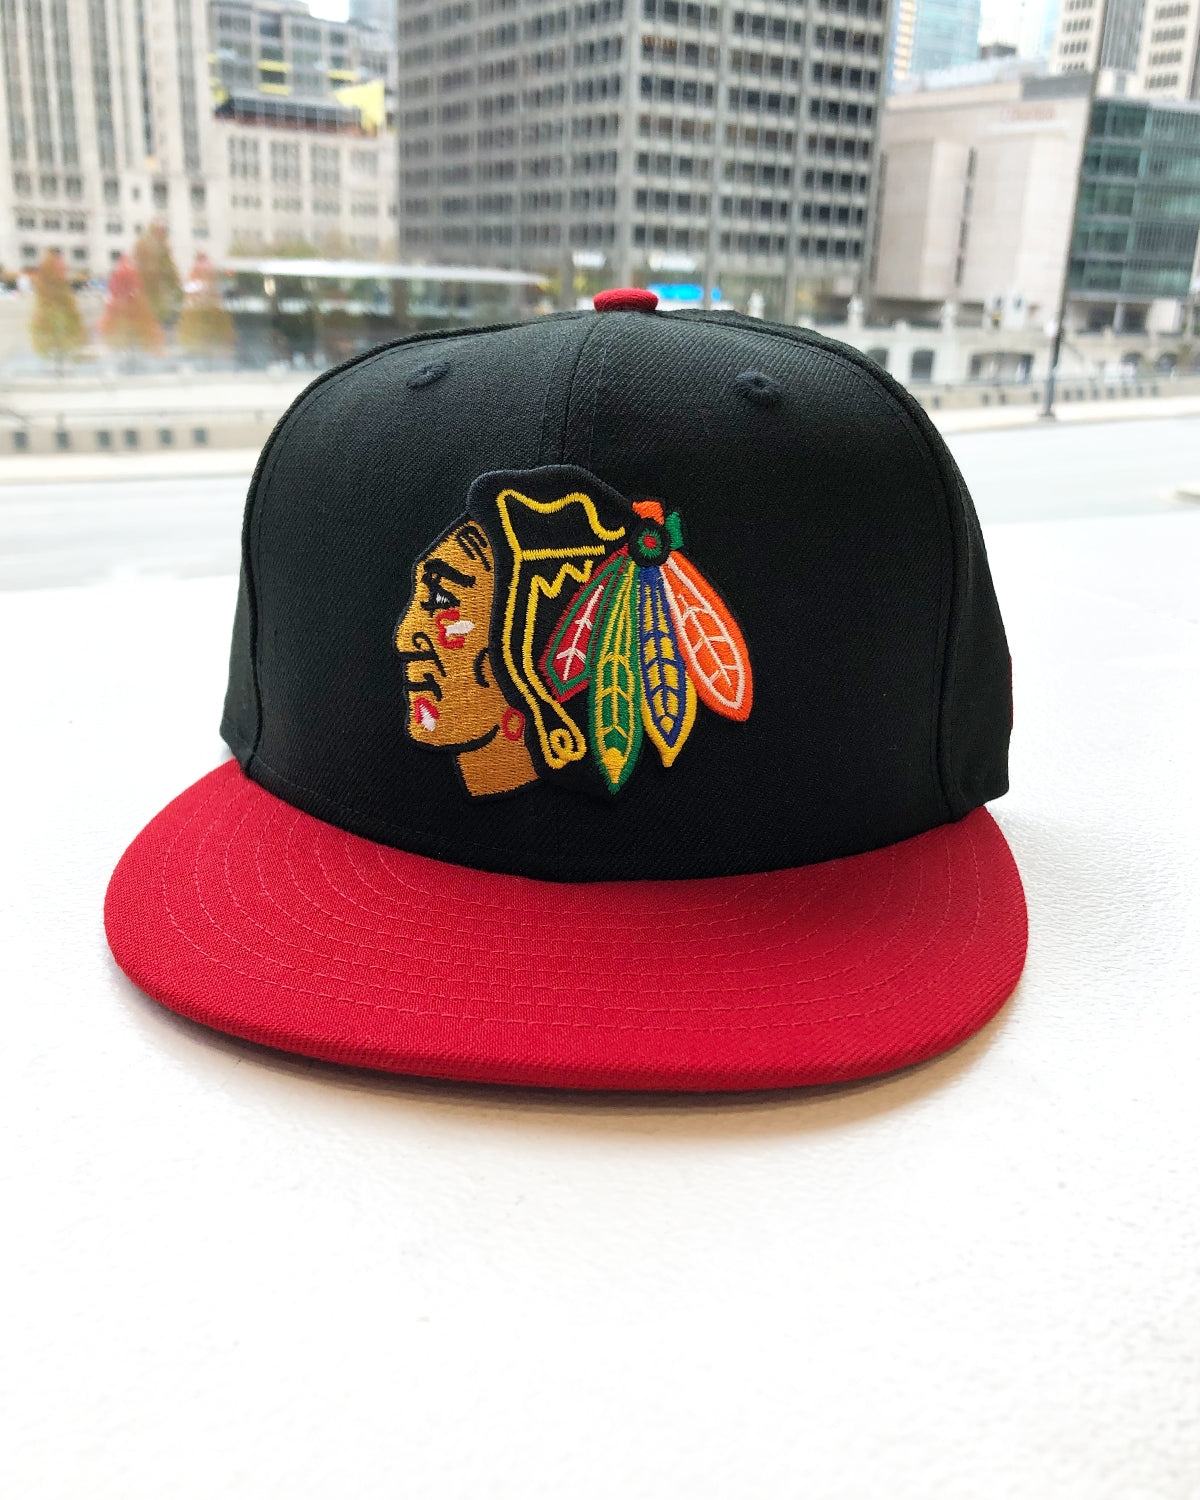  NHL Chicago Blackhawks Basic 59Fifty Cap, Black, 7 1/8 :  Sports Fan Baseball Caps : Sports & Outdoors